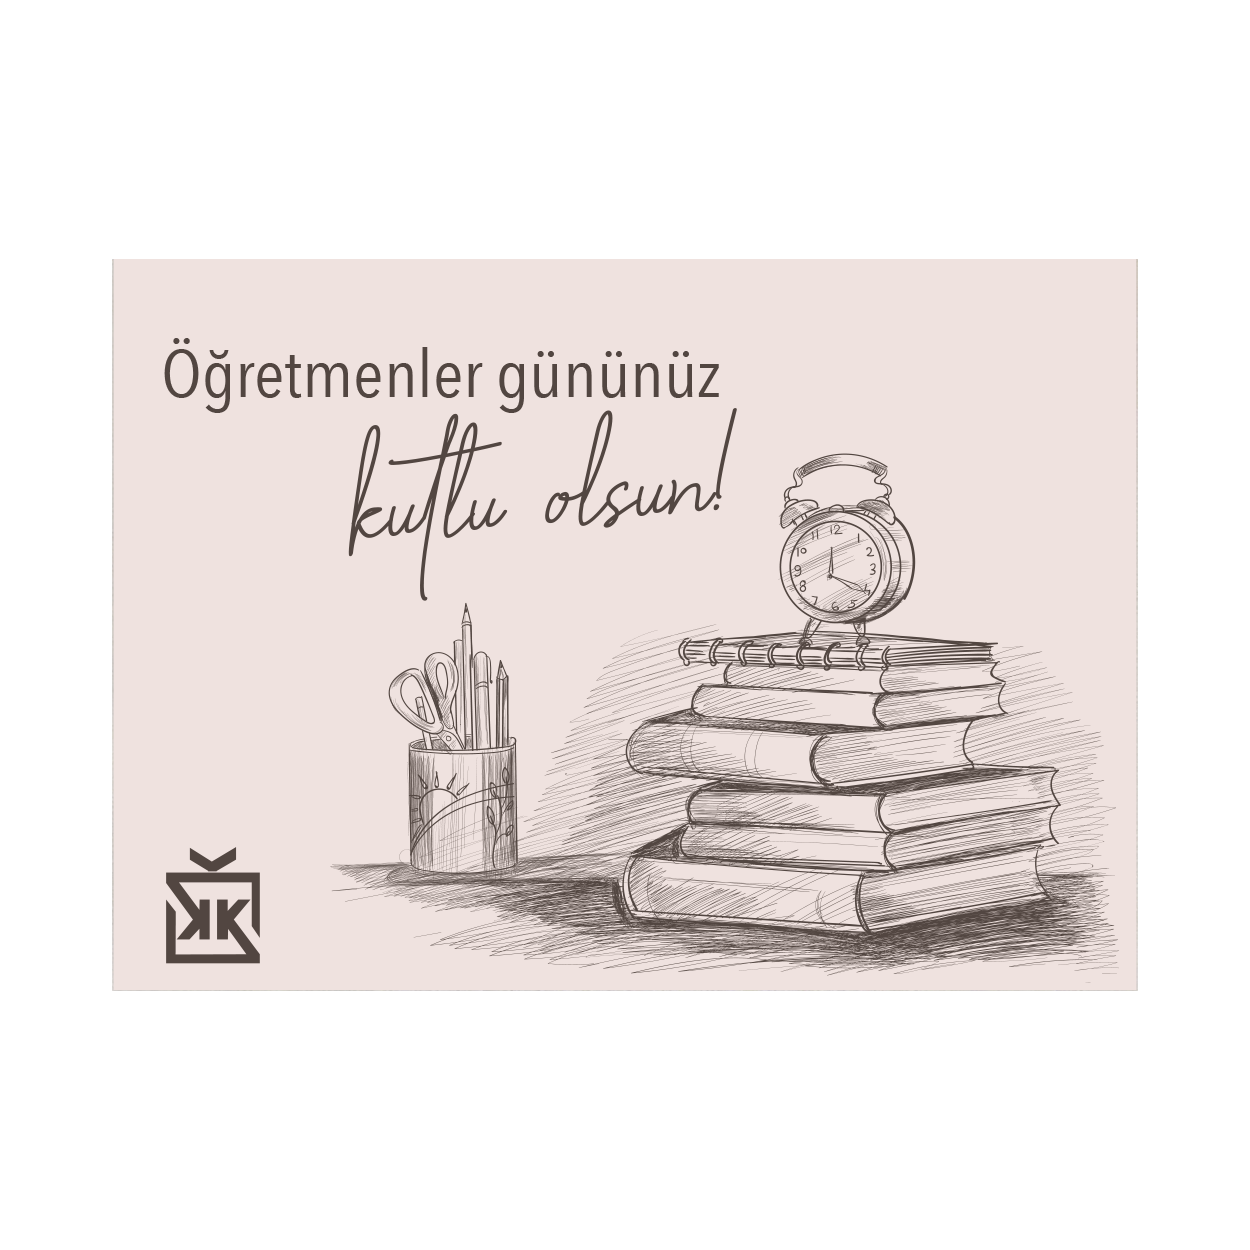 677624-kitap-kurdu-ogretmenler-gunu-motto-karti